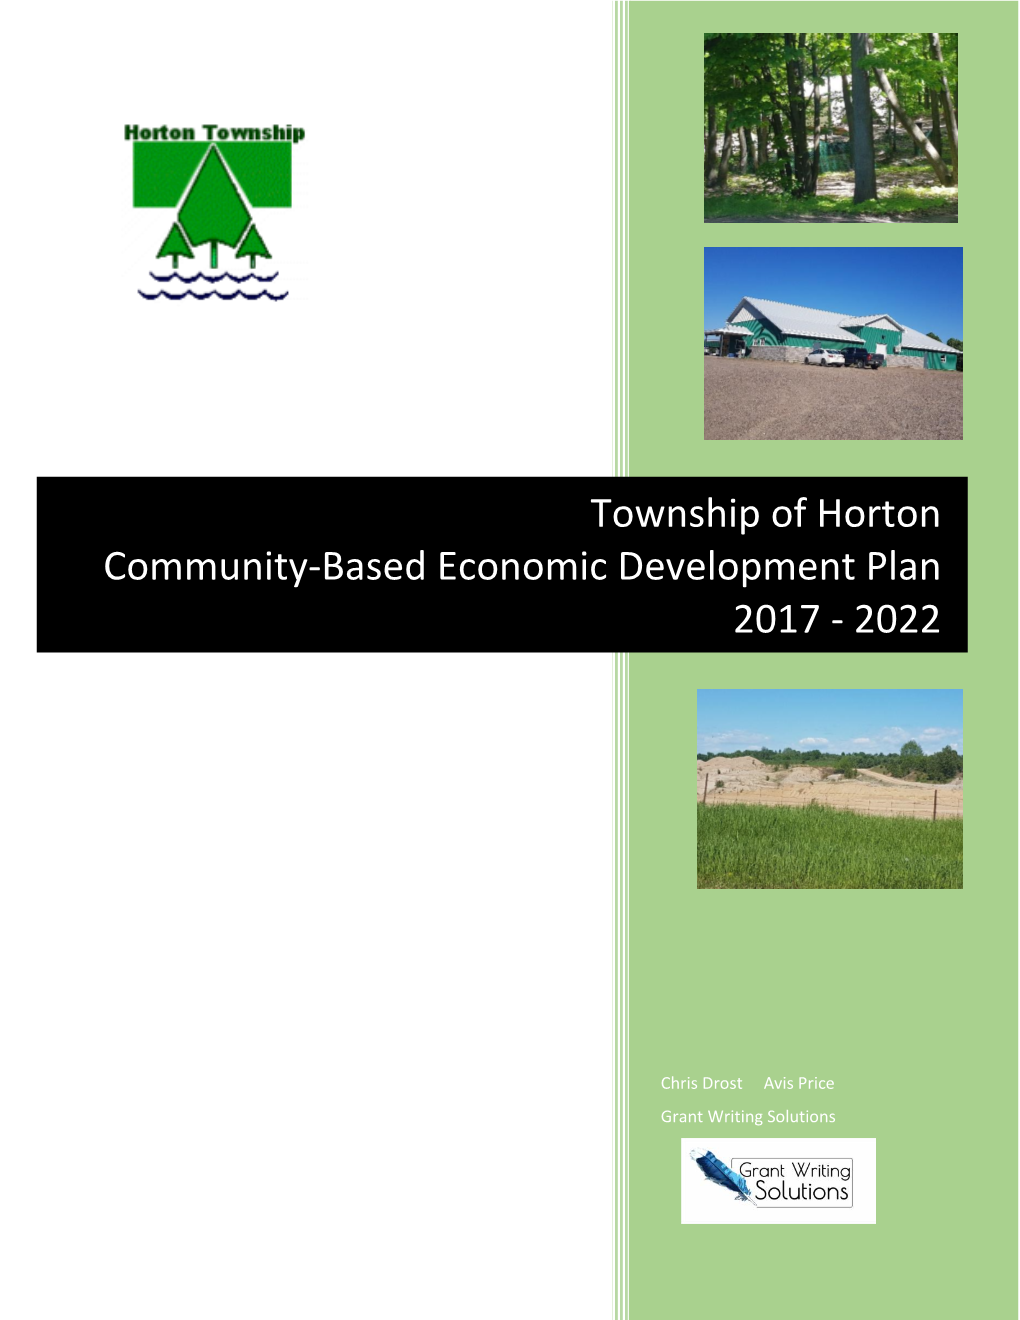 Township of Horton Community-Based Economic Development Plan 2017 - 2022